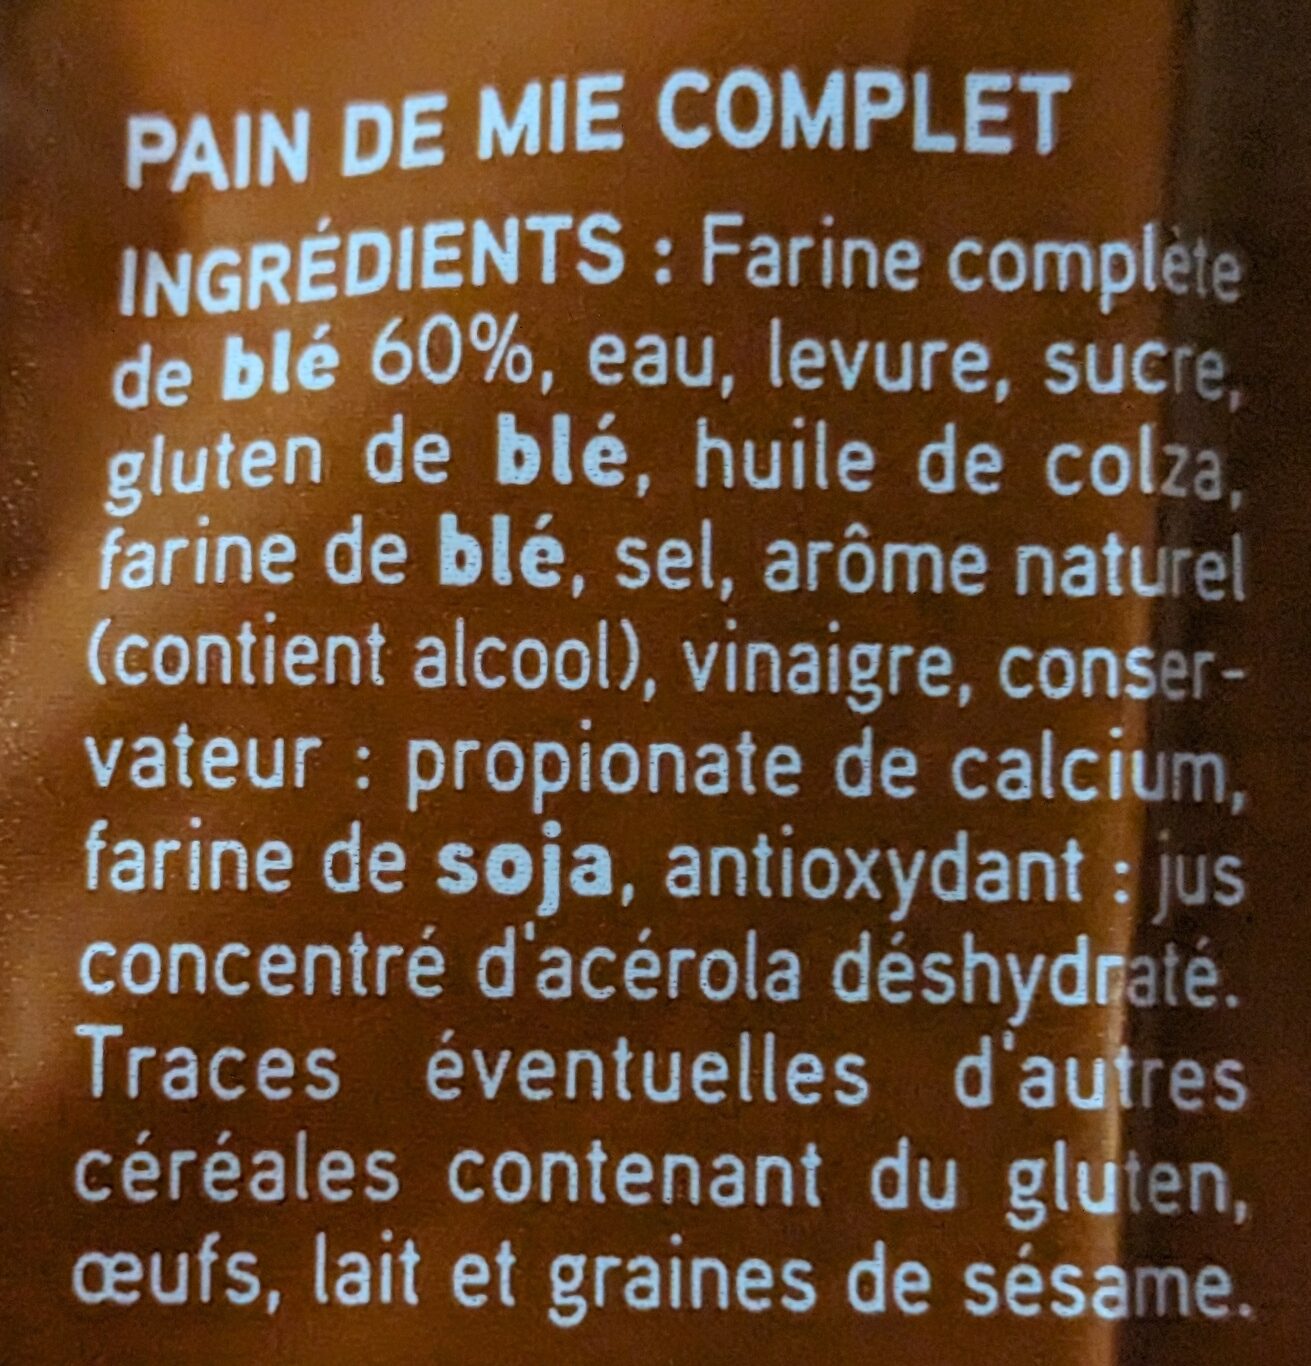 Extra moelleux complet - Ingredients - fr